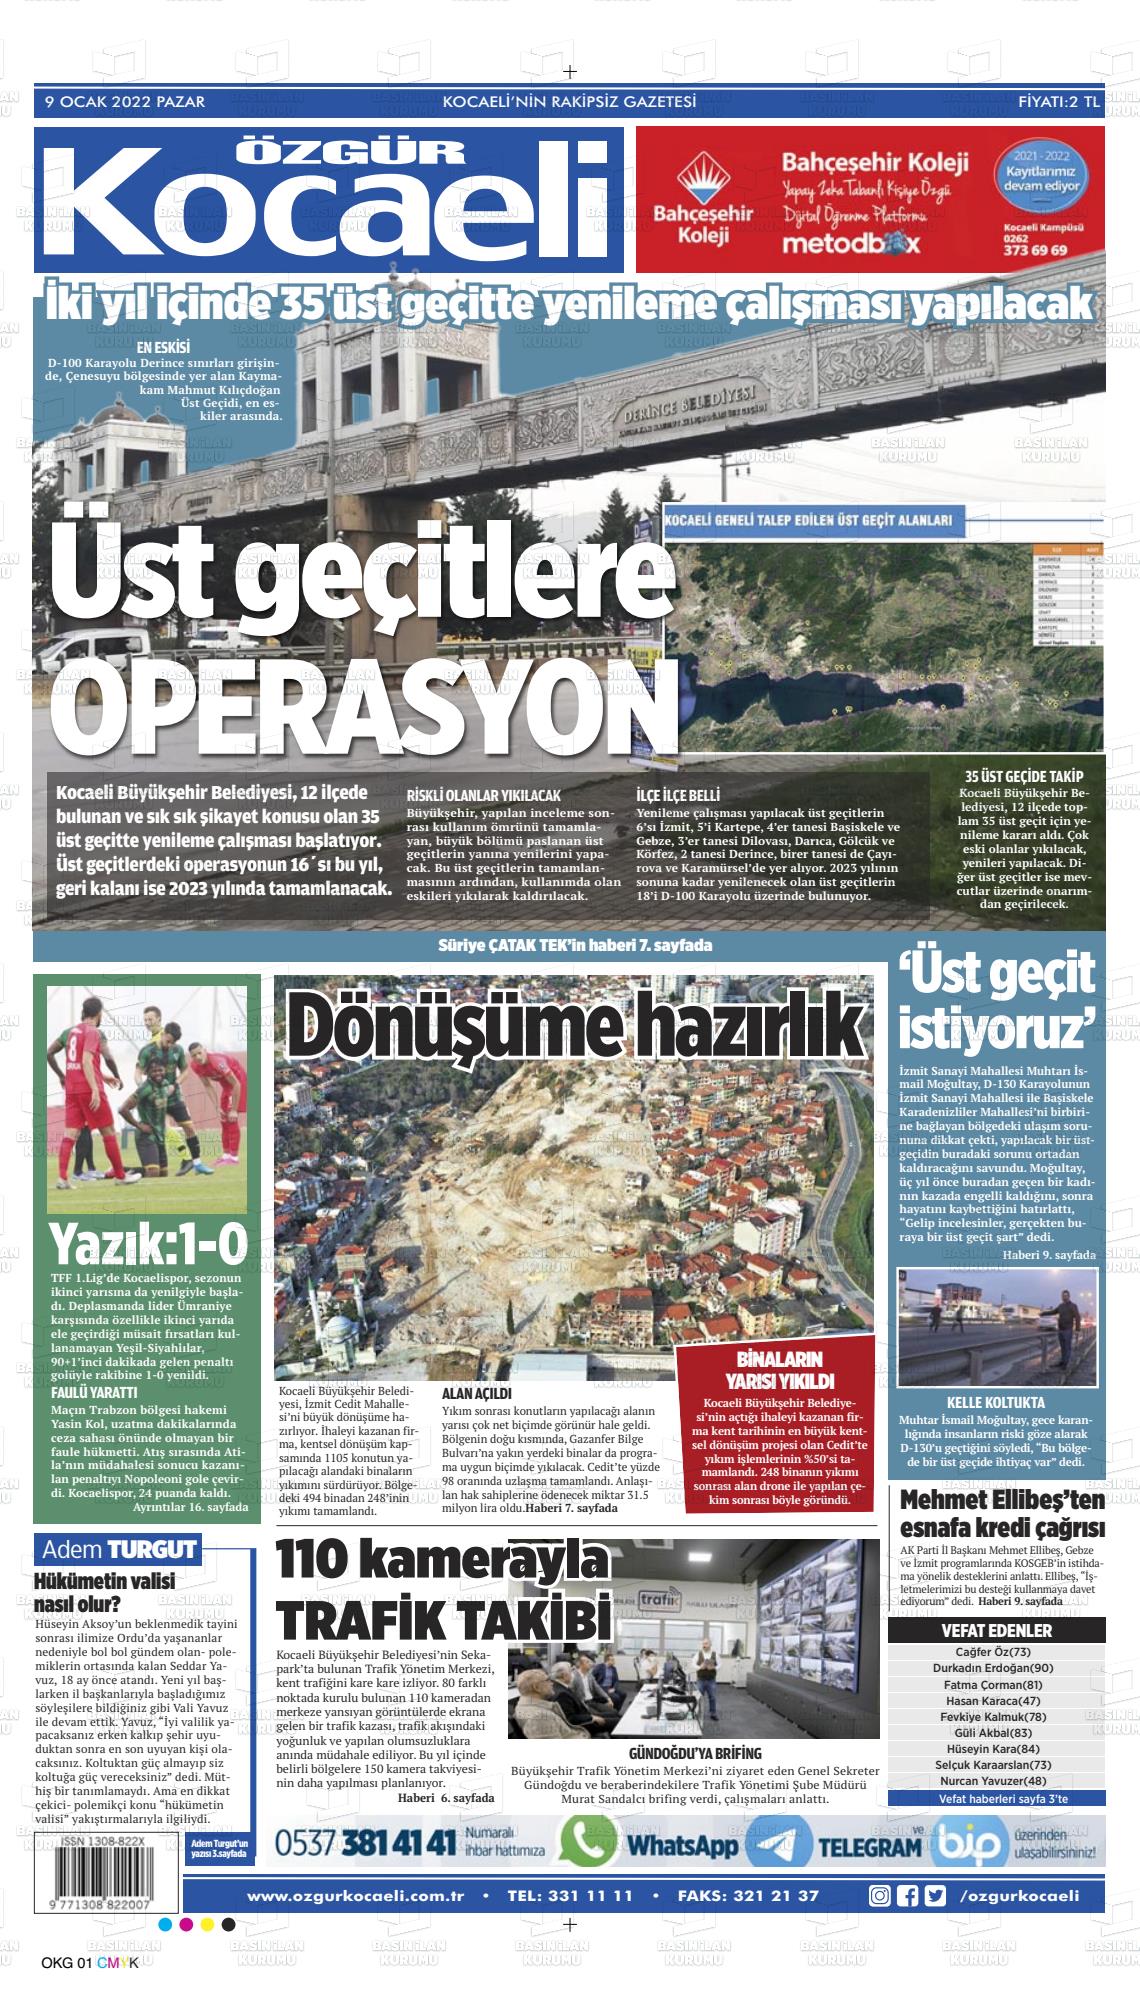 09 Ocak 2022 Özgür Kocaeli Gazete Manşeti